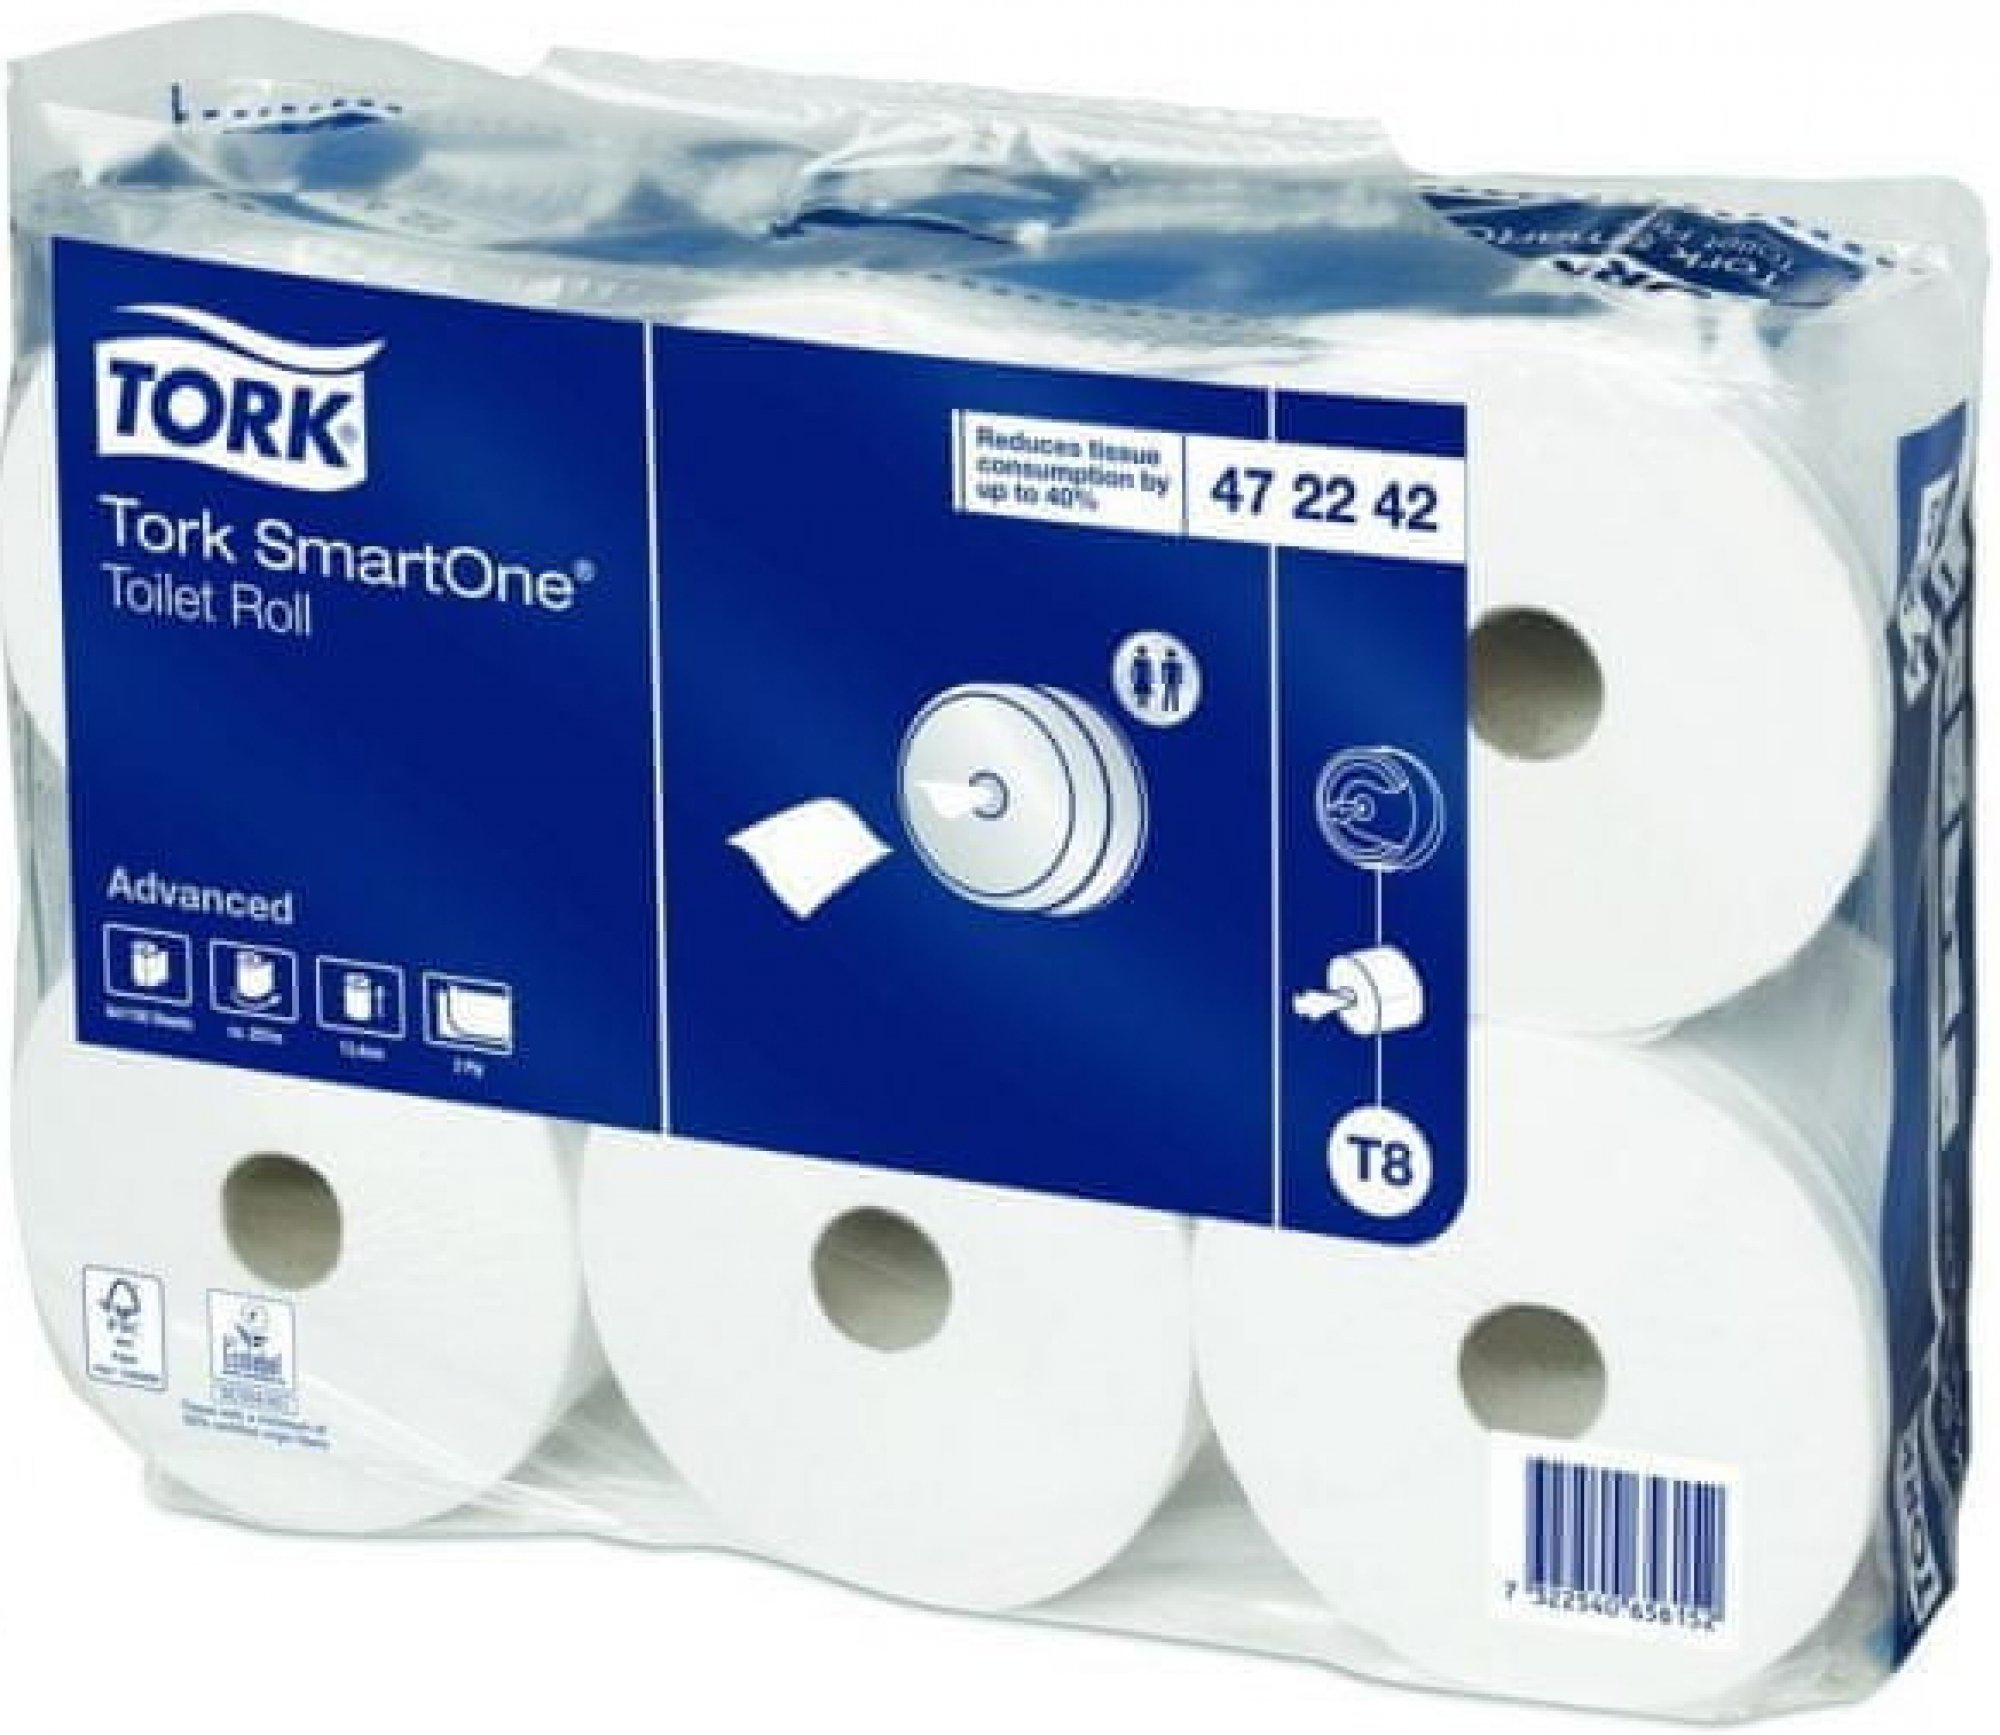 TORK T8 472 242 Toaletný papier "SmartOne"6 ks/krt